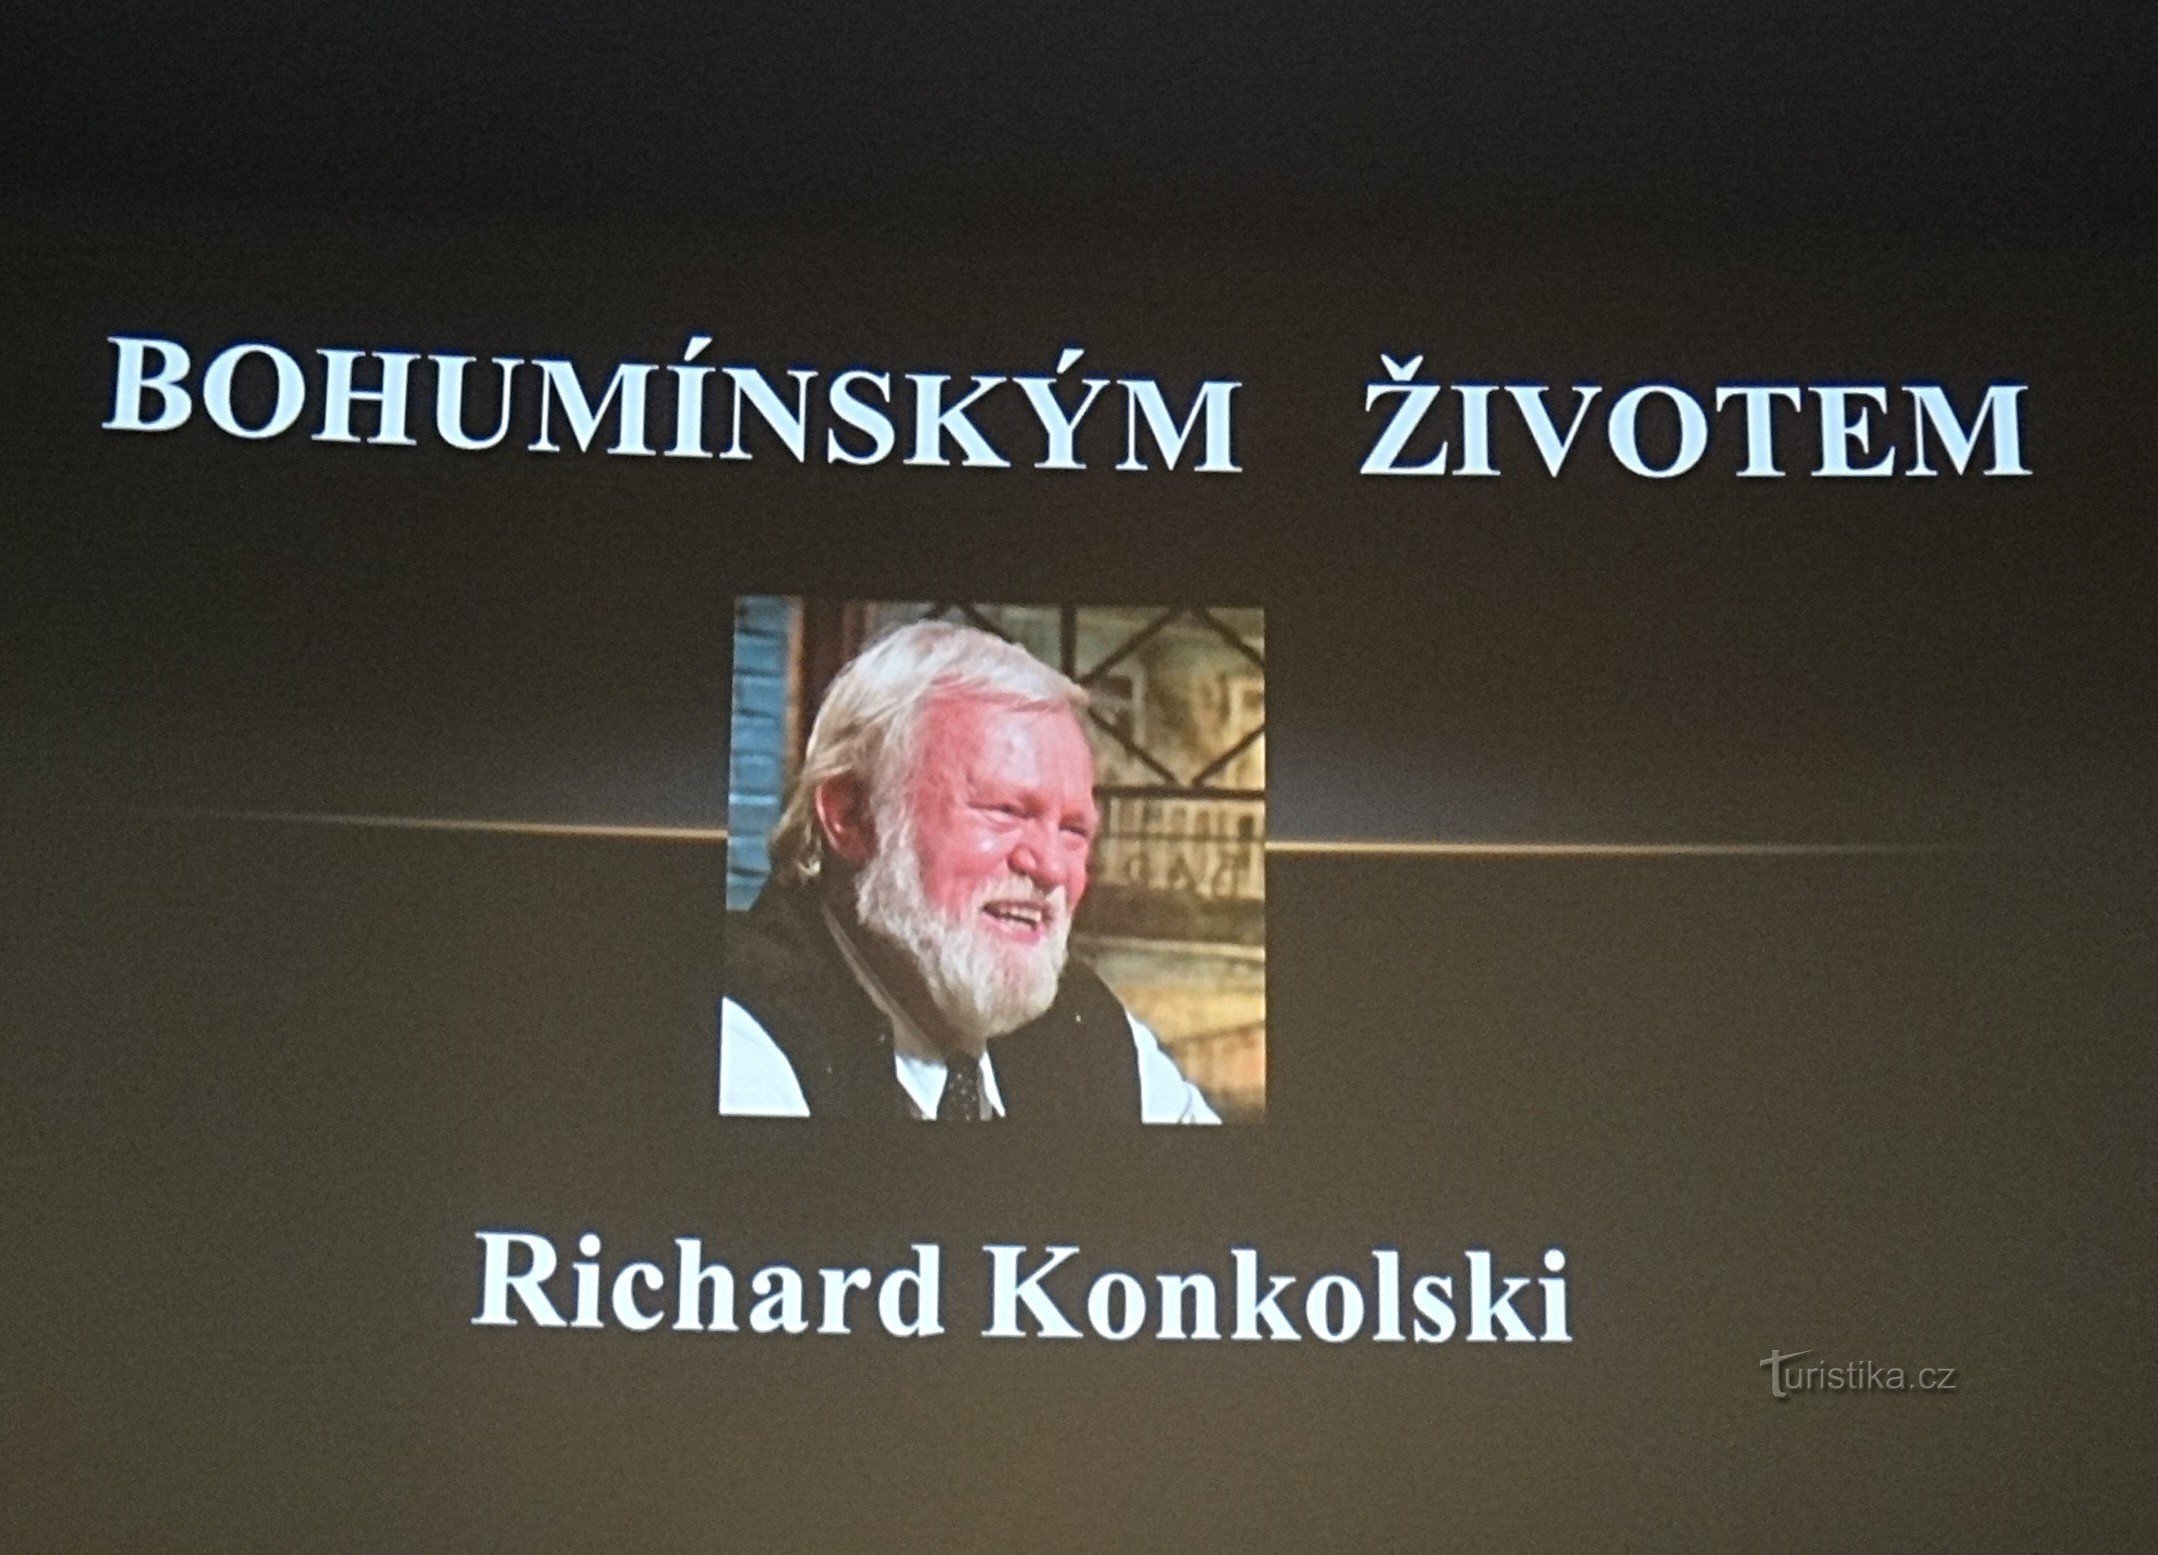 Richard Konkolski praat in de bioscoop